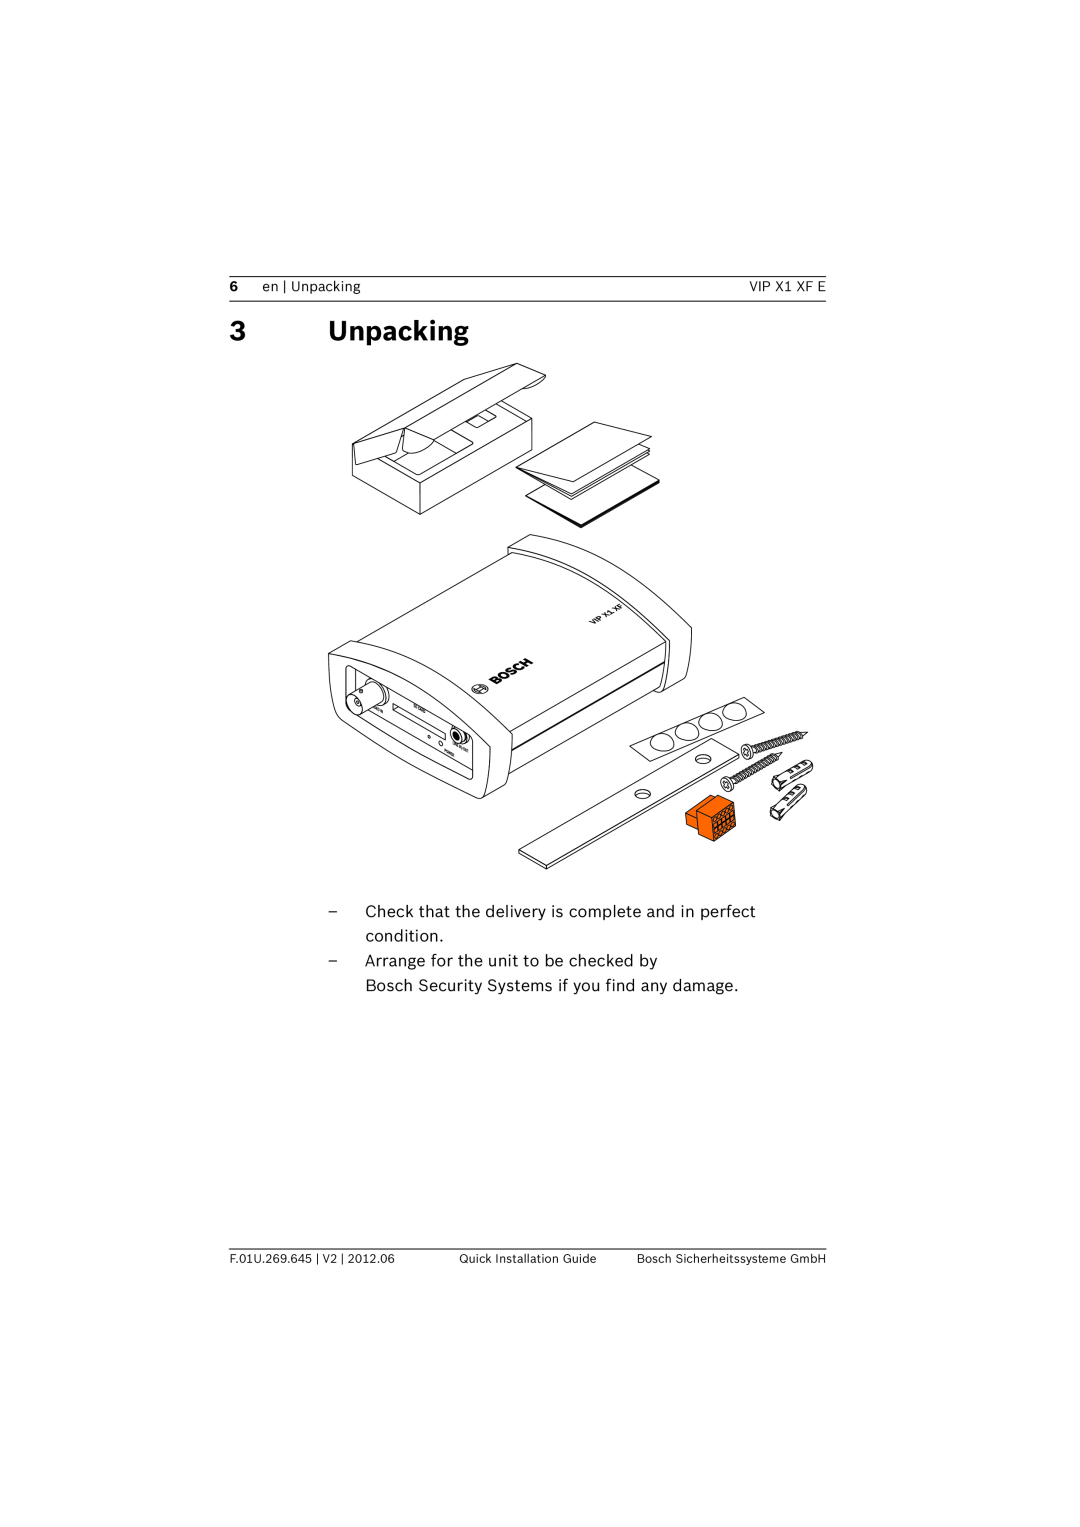 Bosch Appliances VIP X1 XF E manual 3Unpacking, en Unpacking, F.01U.269.645, Quick Installation Guide 